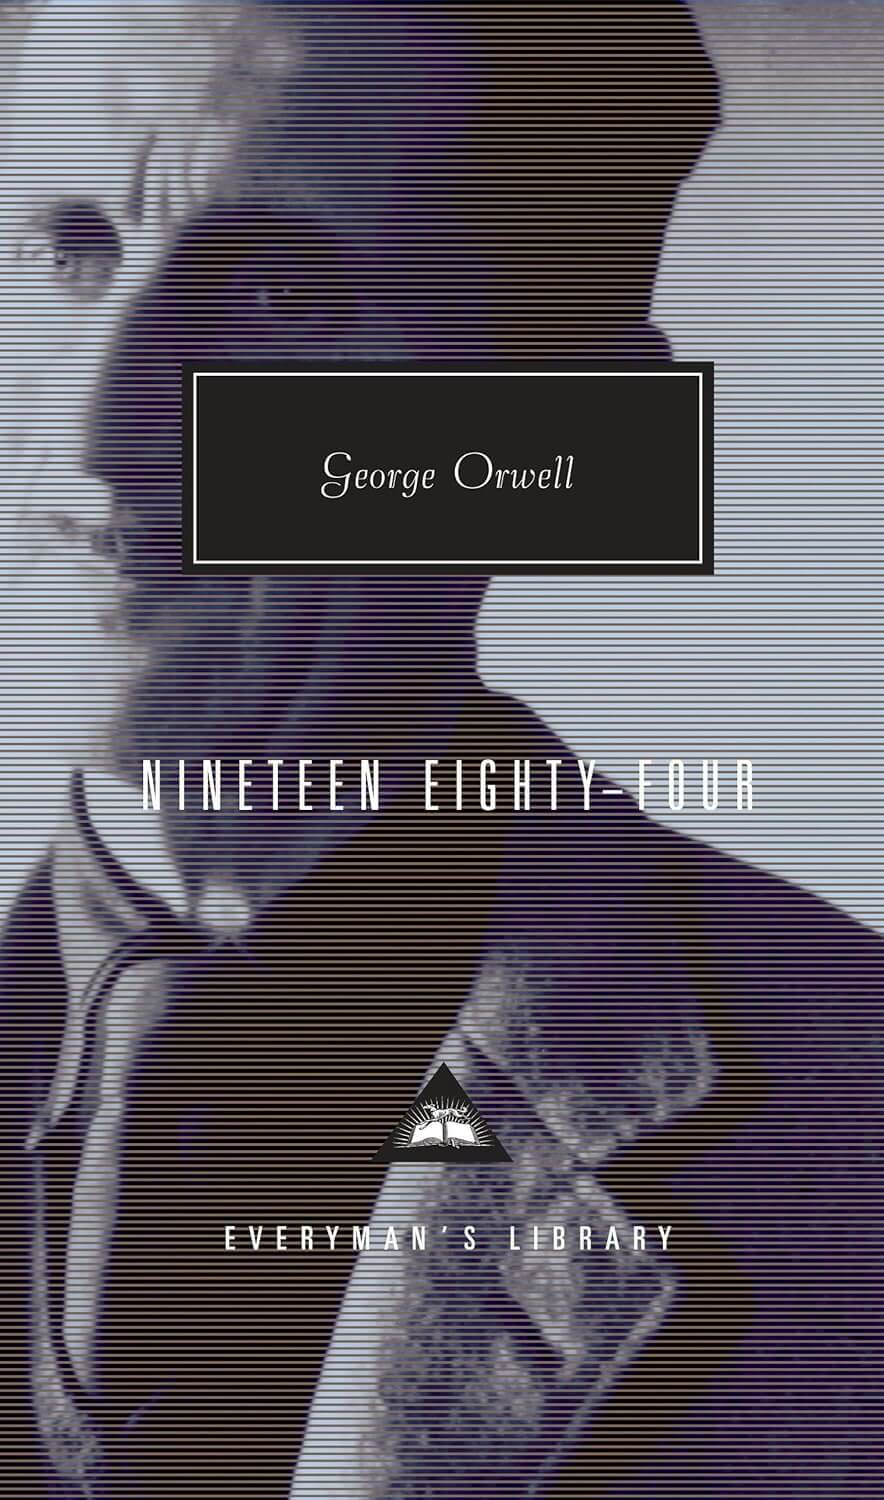 "1984" by George Orwell